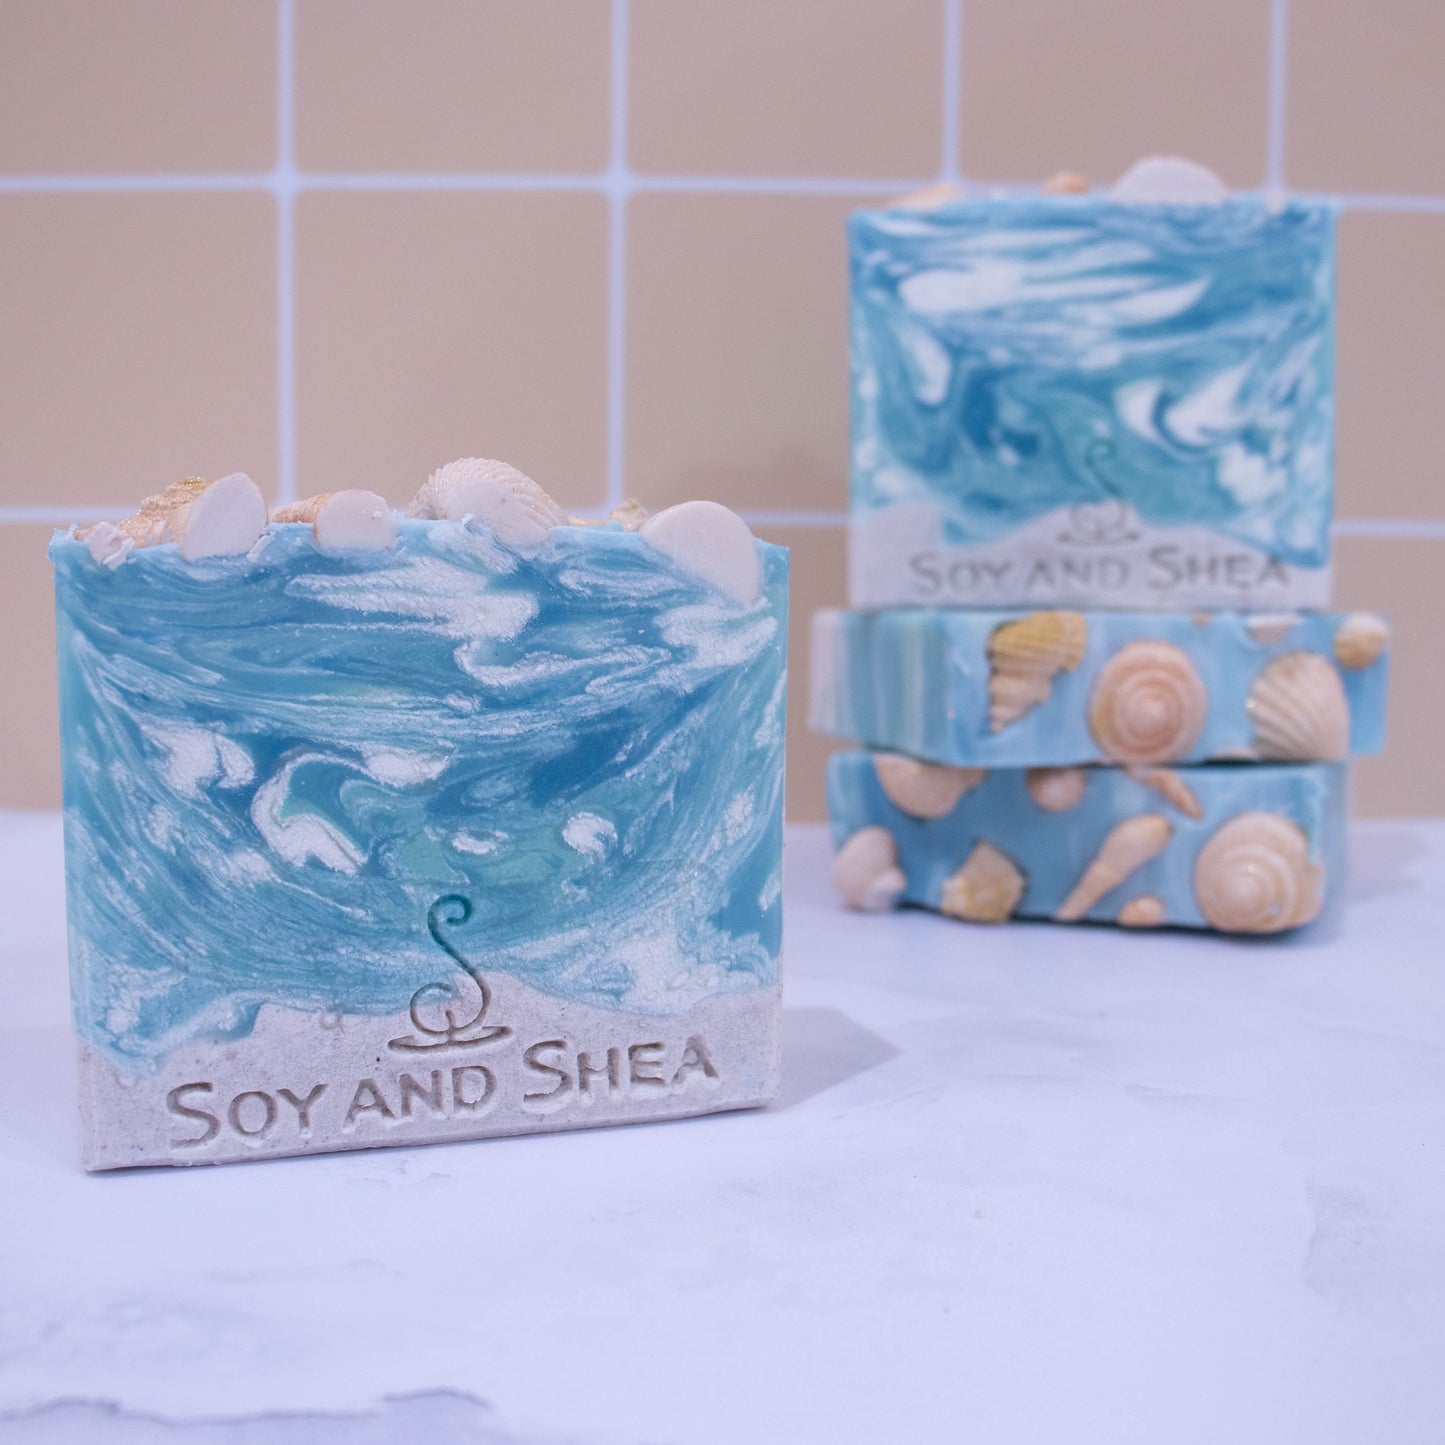 Seashells Exfoliating Soap Bar